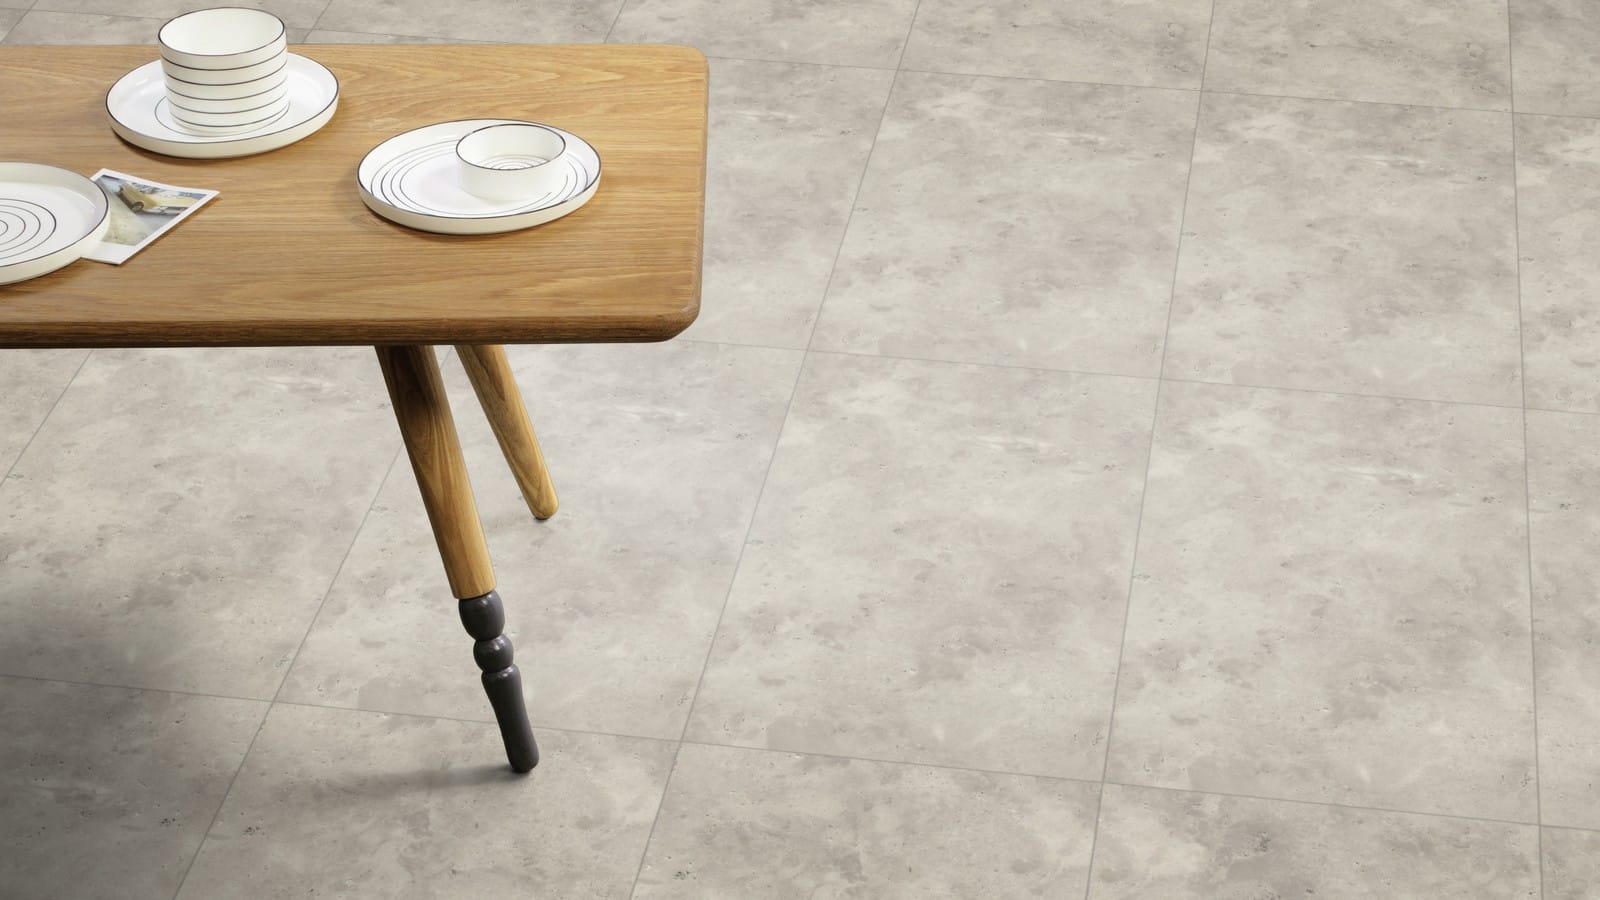 The Uniform Block design of Worn Concrete luxury vinyl tile by Amtico